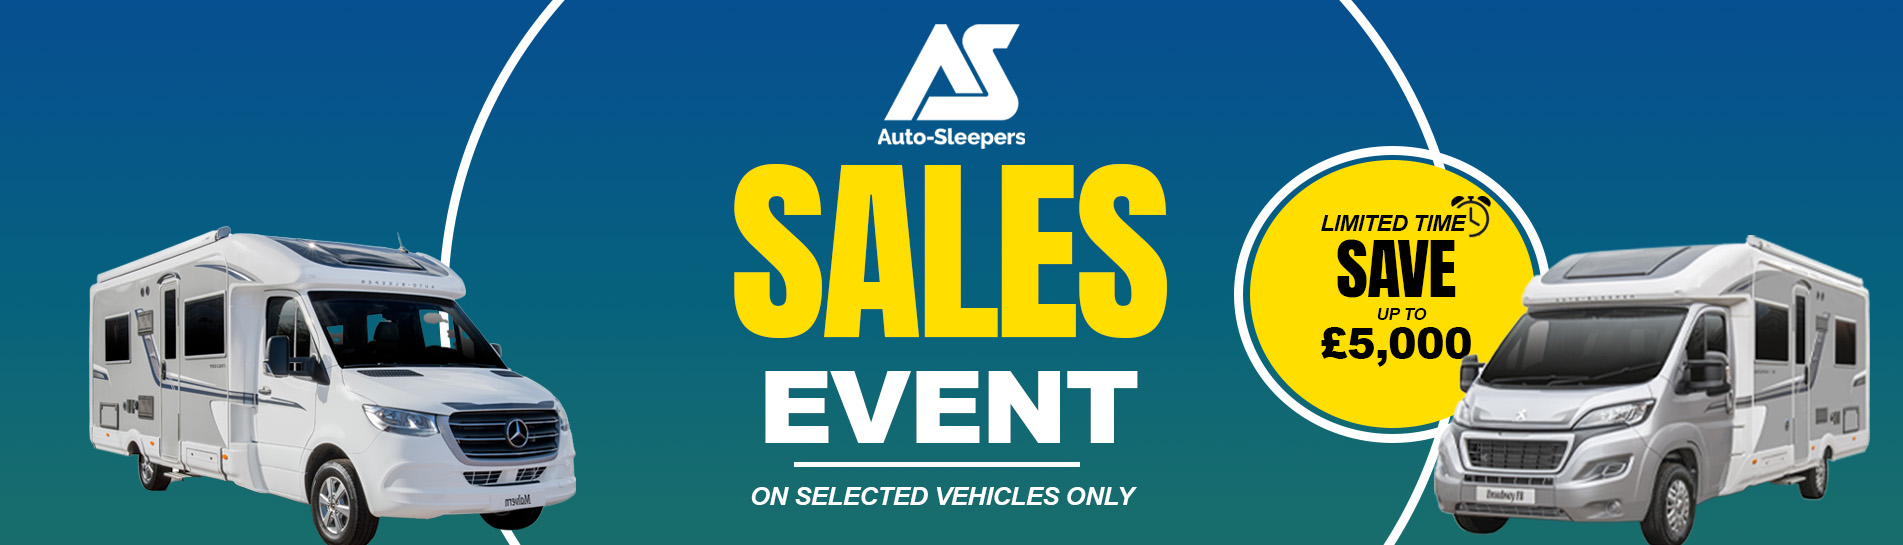 Auto-Sleepers Sale Event